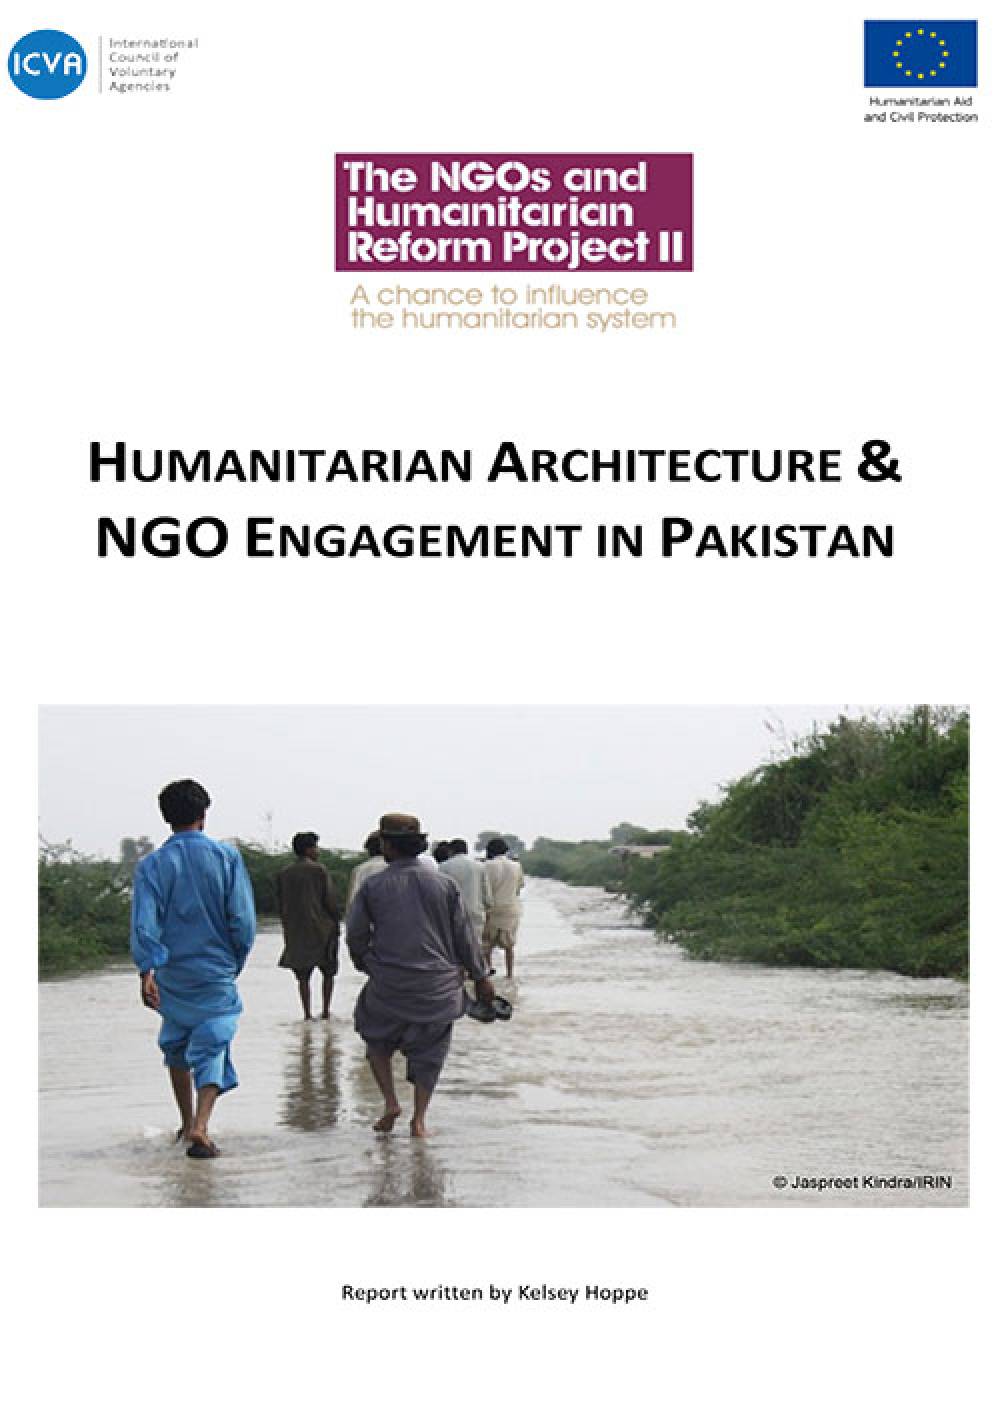 Humanitarian Architecture & NGO Engagement in Pakistan